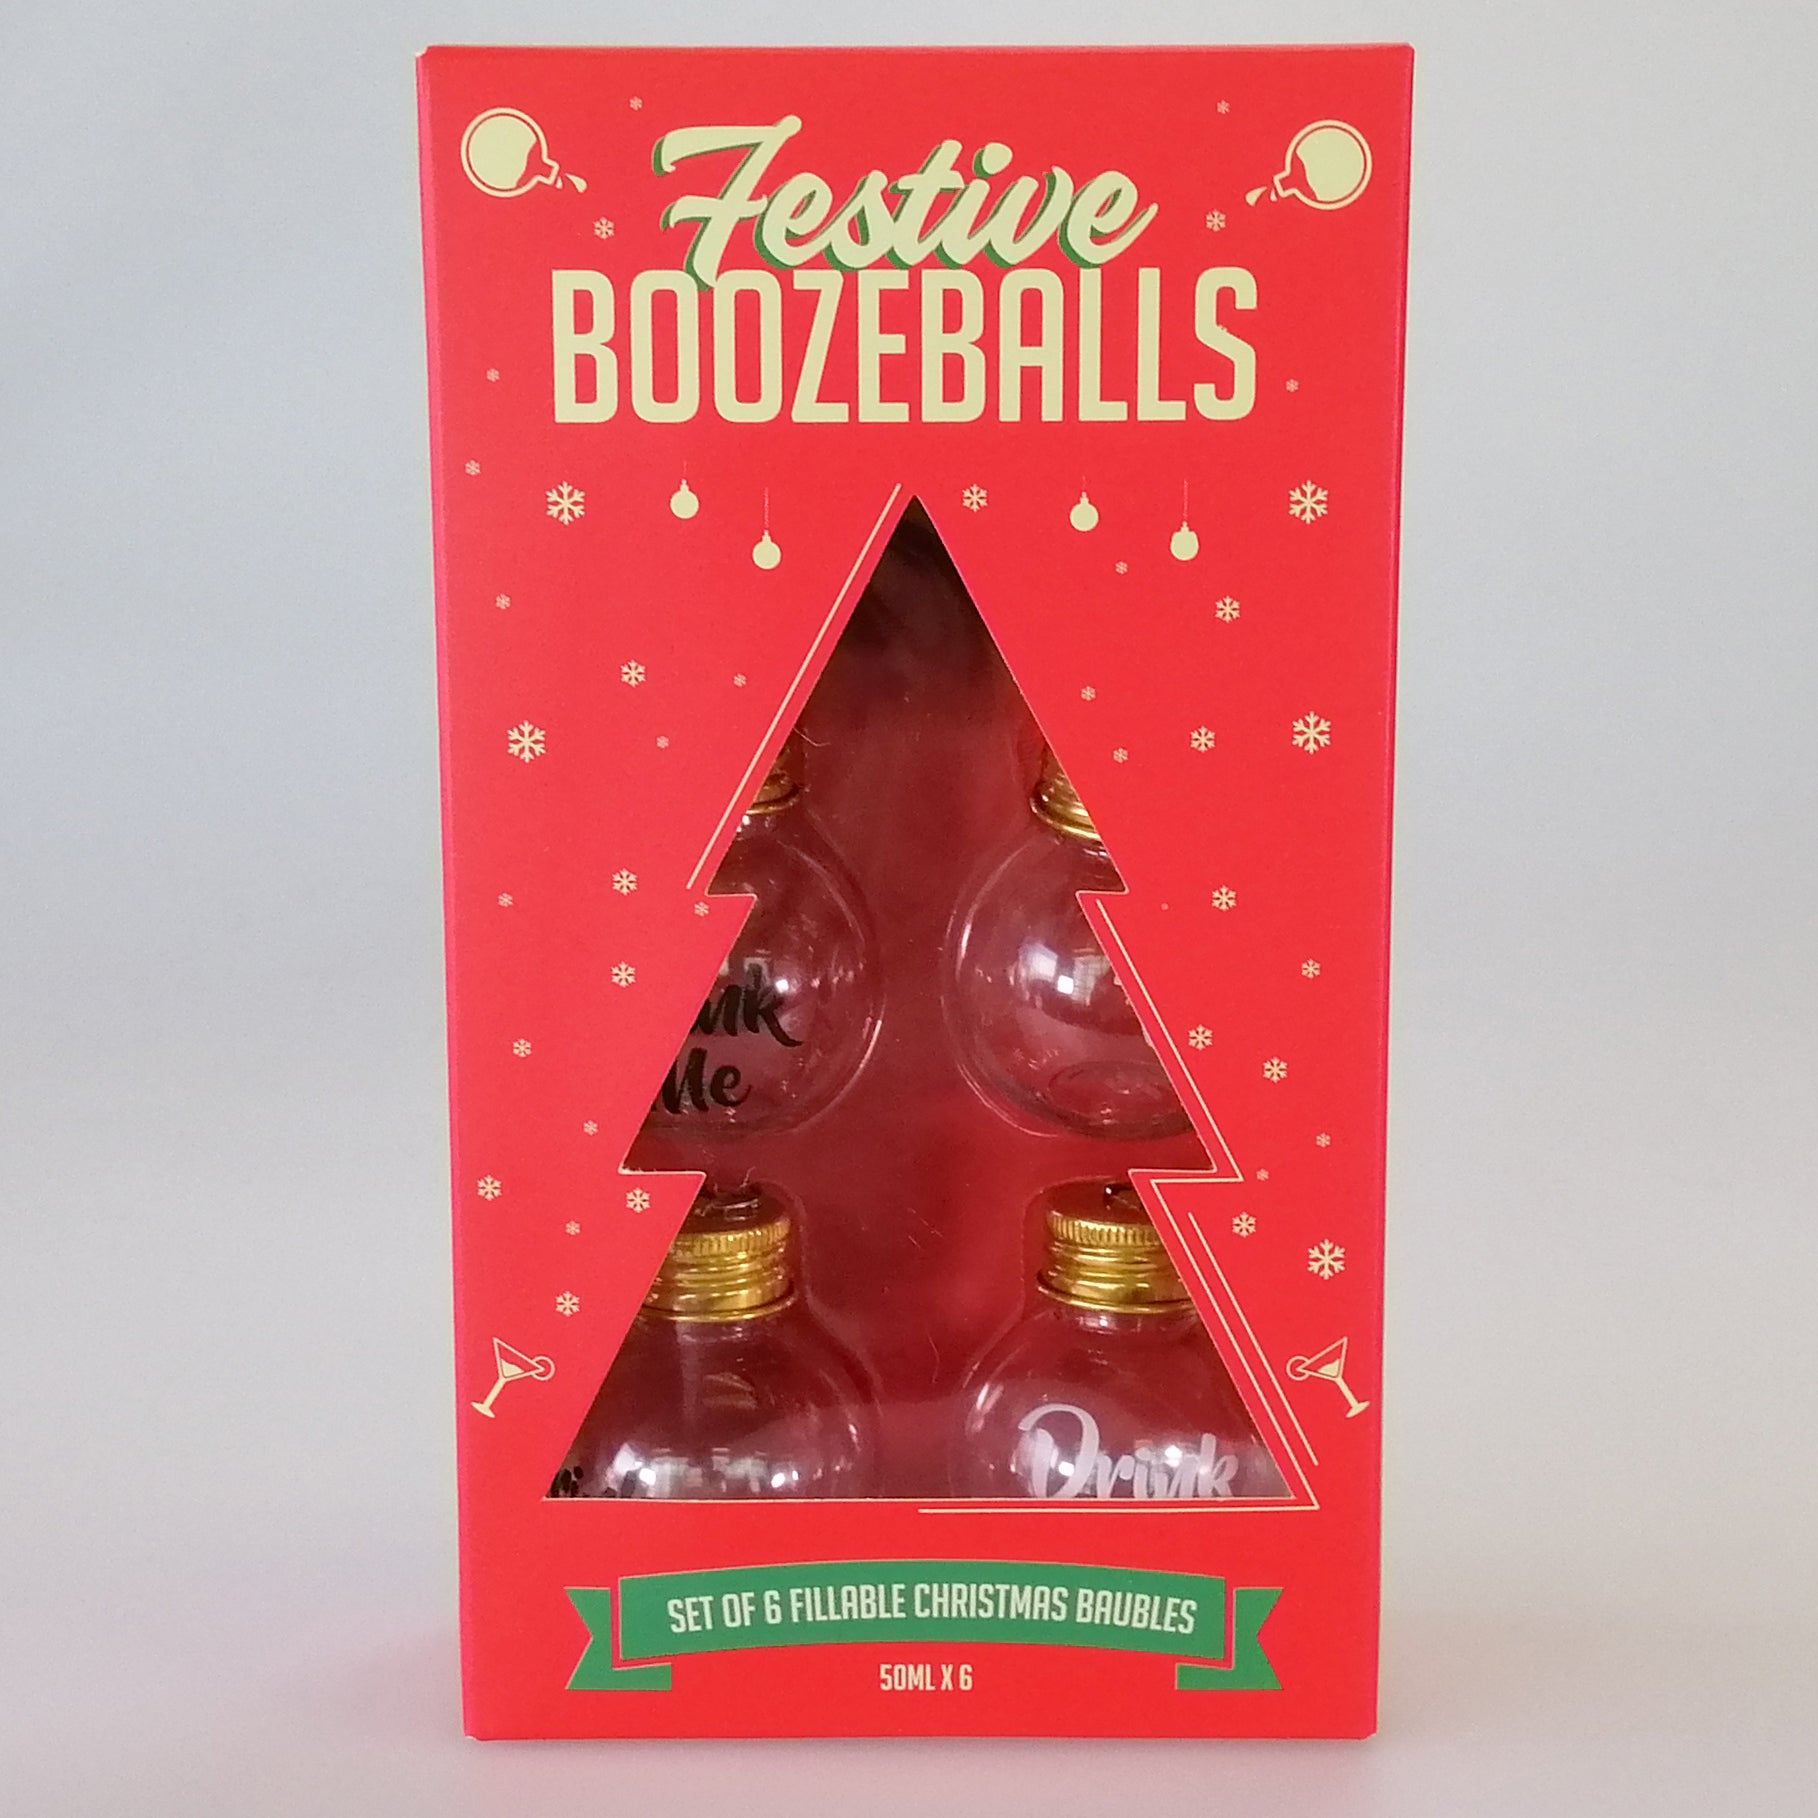 Festive Boozeballs - Set of 6